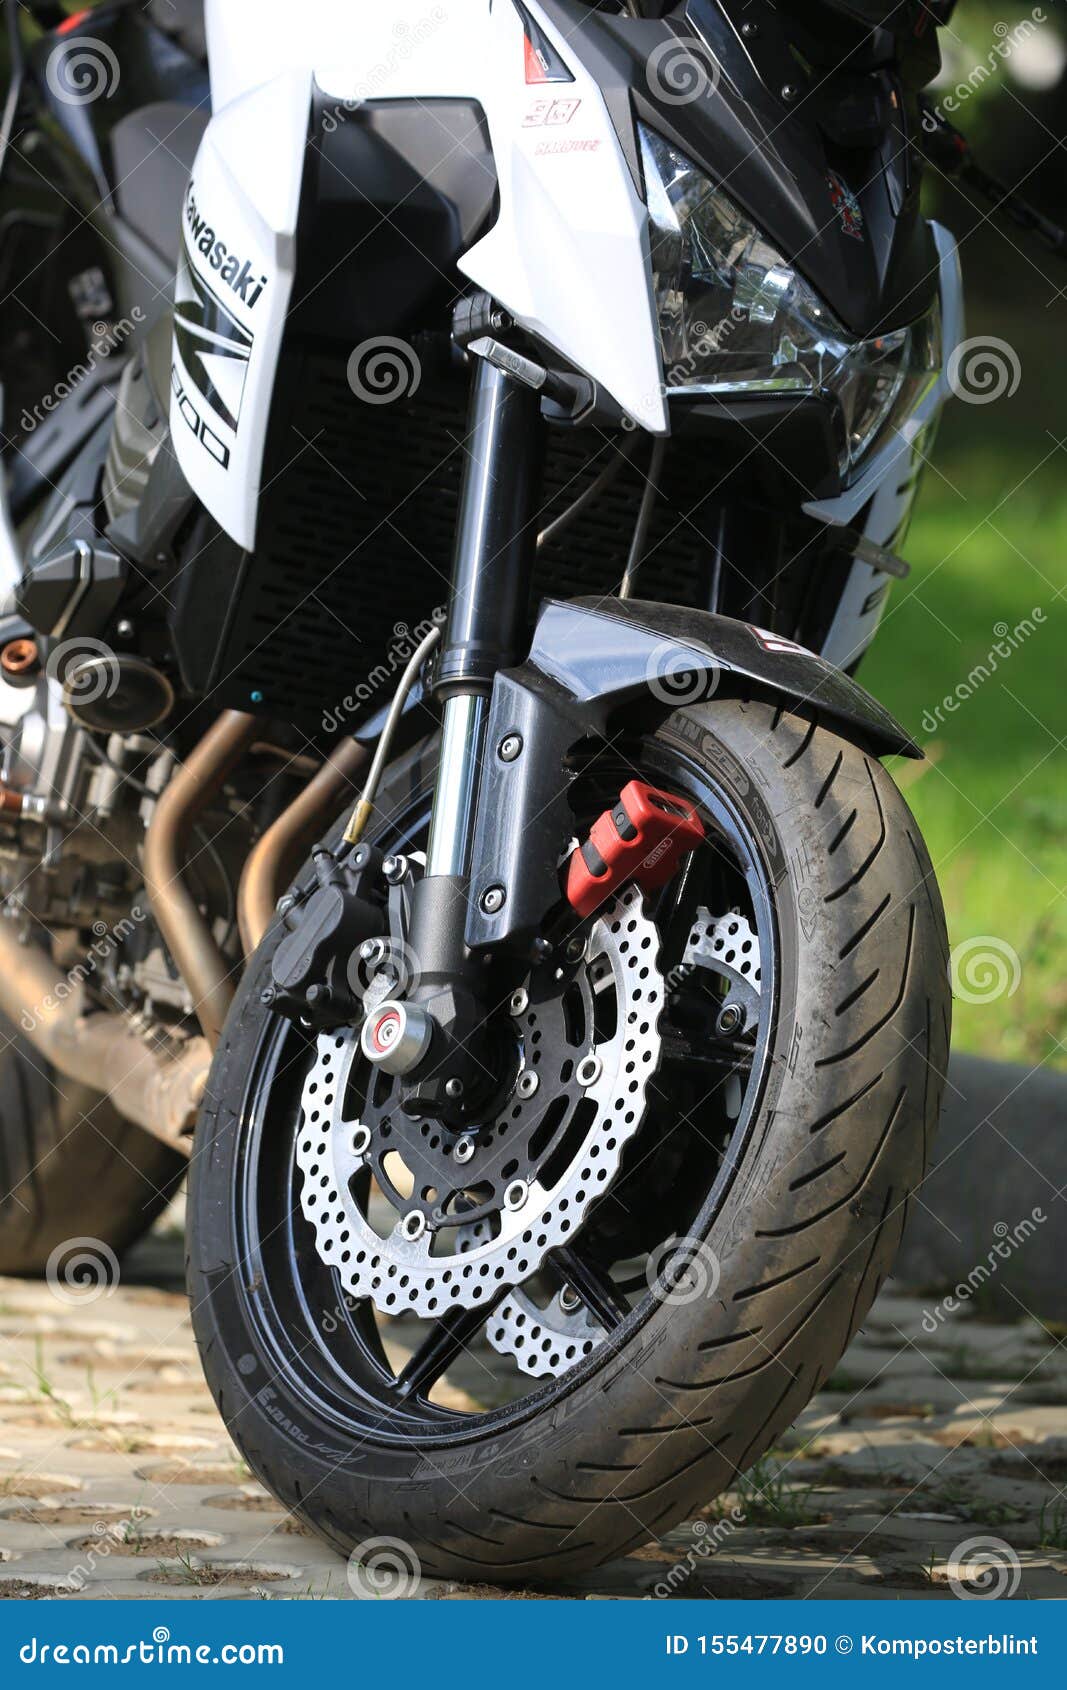 Front Wheel and Headlight of Motorcycle Kawasaki Z800 a Sunny Day, Up Editorial Image - of motorcycle, leningrad: 155477890